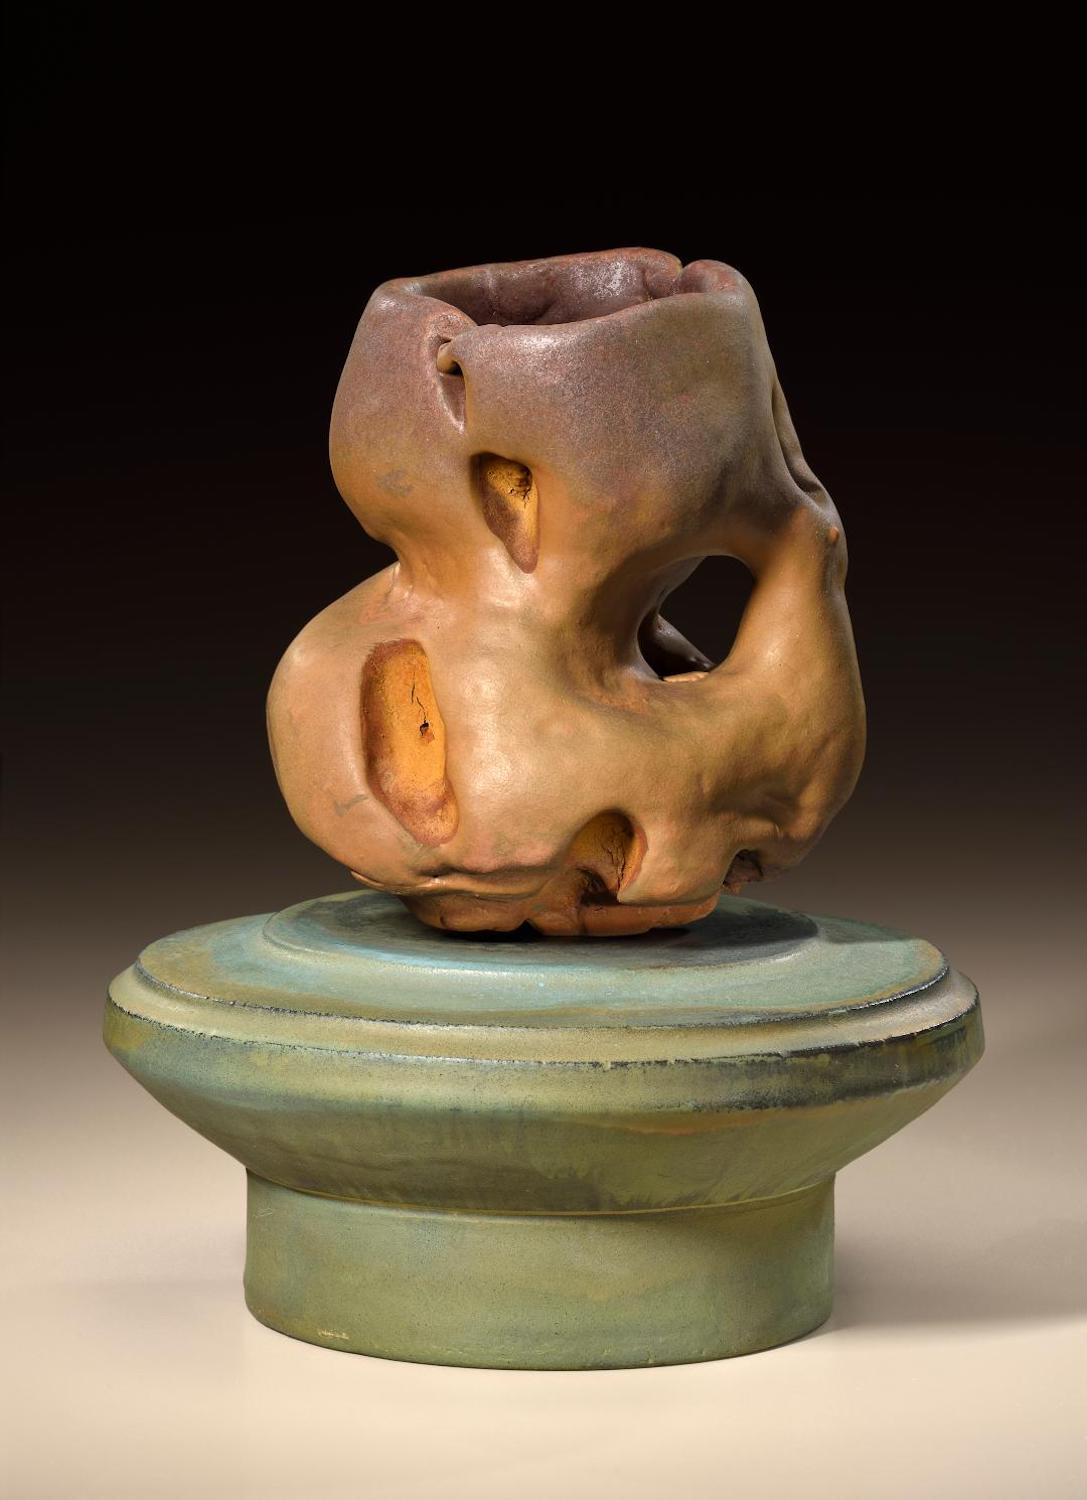 Glazed Richard Hirsch Ceramic Scholar Rock Cup Sculpture #43, 2017 For Sale